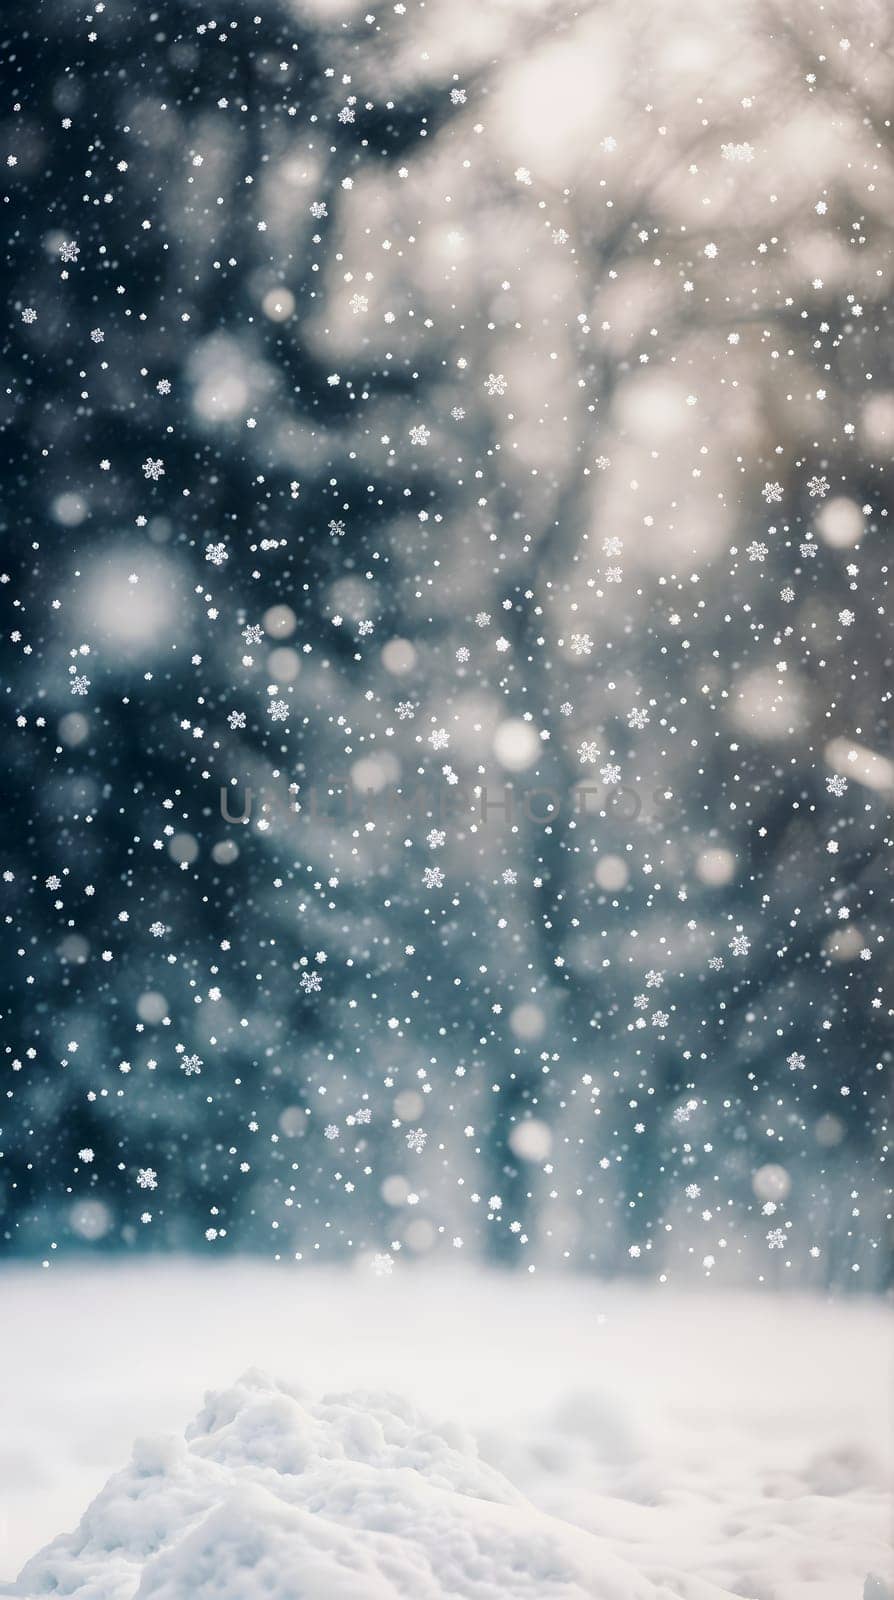 Blurry Snow on Dark Background - Winter scene by chrisroll